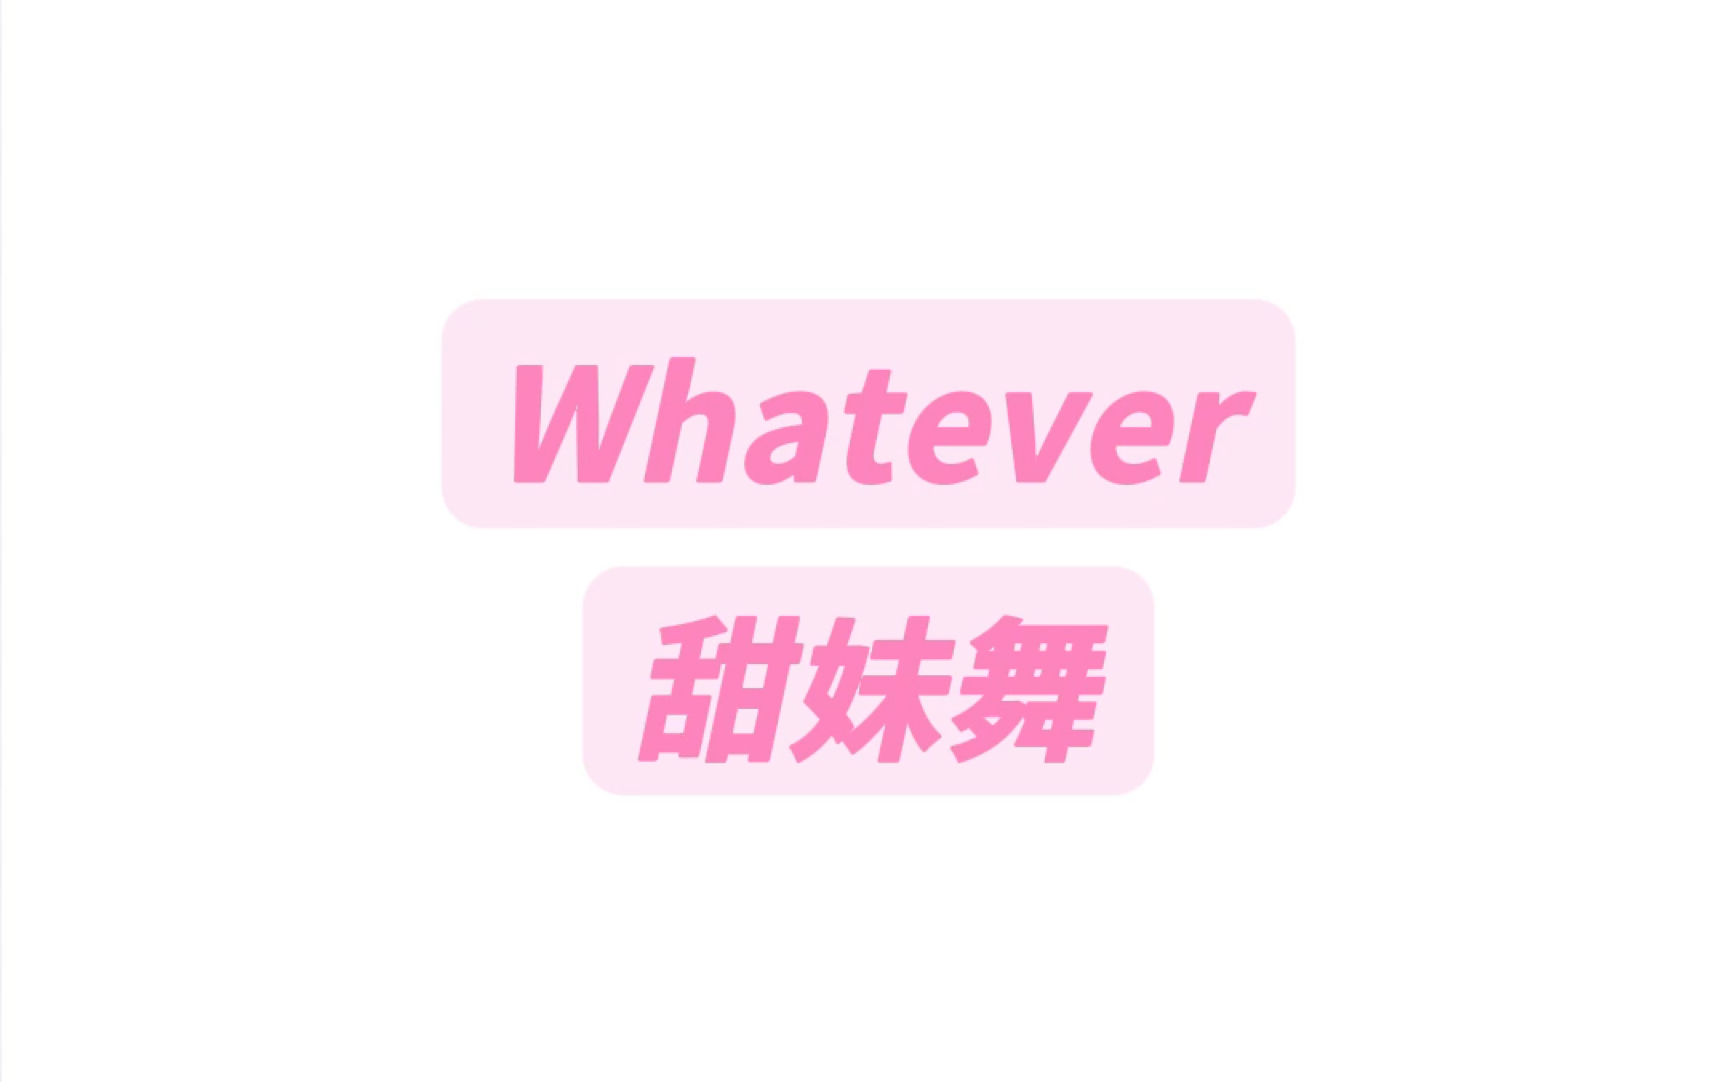 Whatever 甜妹舞纯享版+慢速版音译教学#whatever甜妹舞 #whatever甜蜜手势舞 #甜妹舞whatever